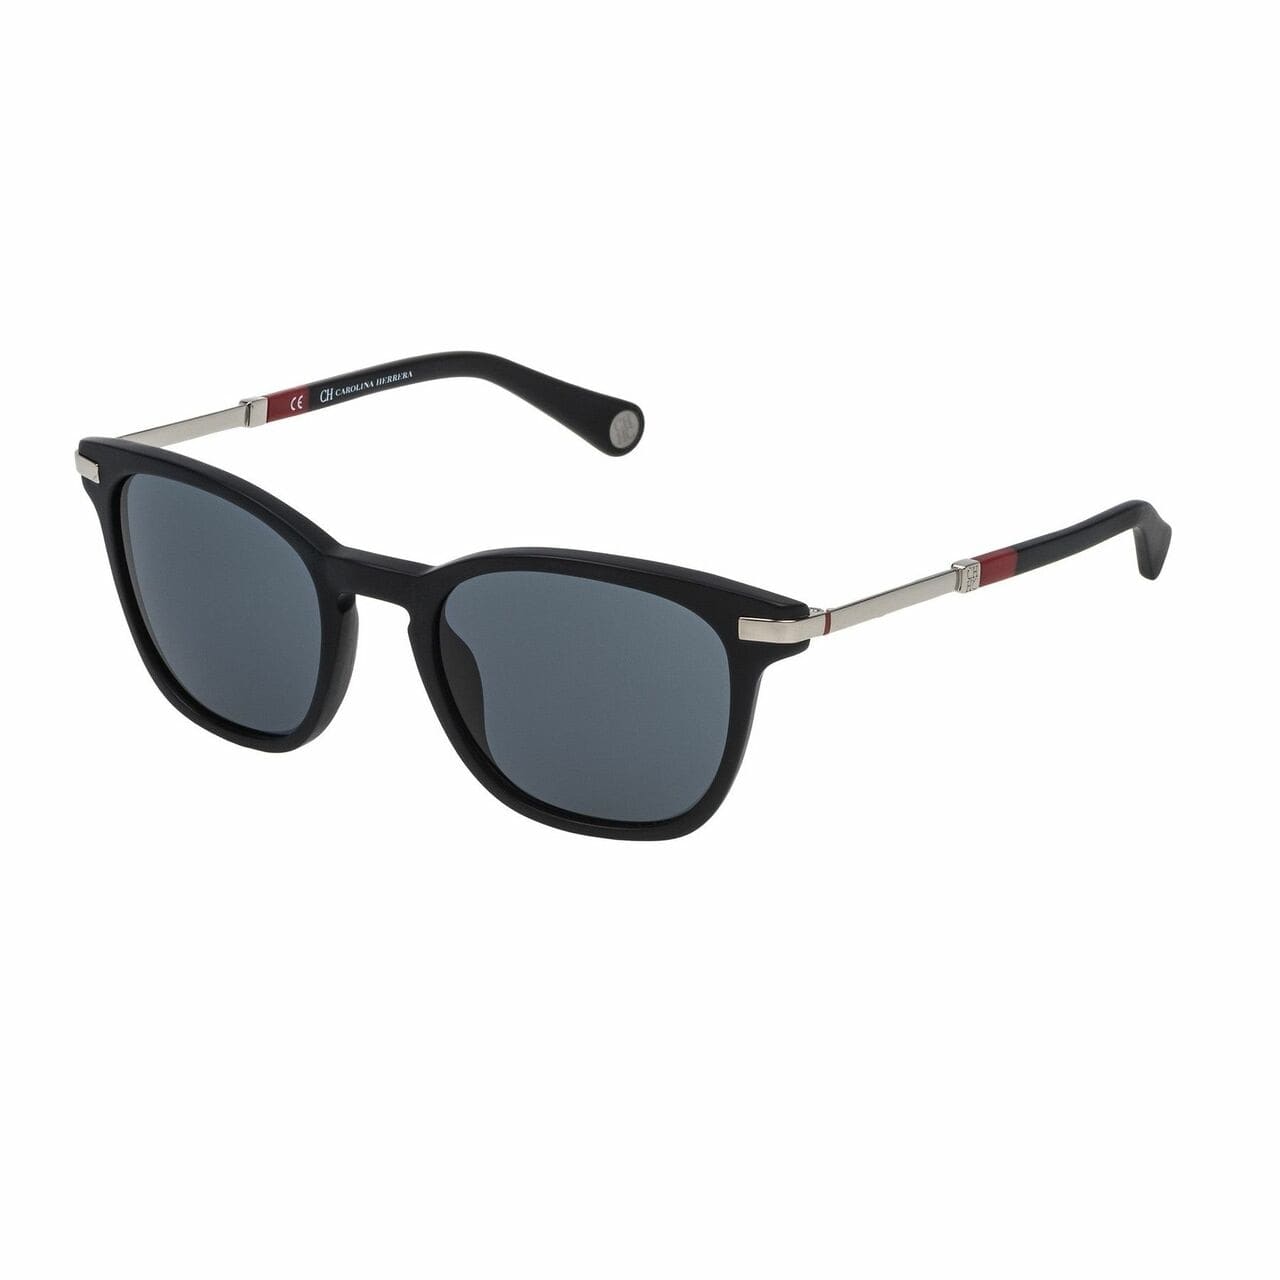 Carolina Herrera SHE683-703 Black Square Grey Lens Women's Sunglasses